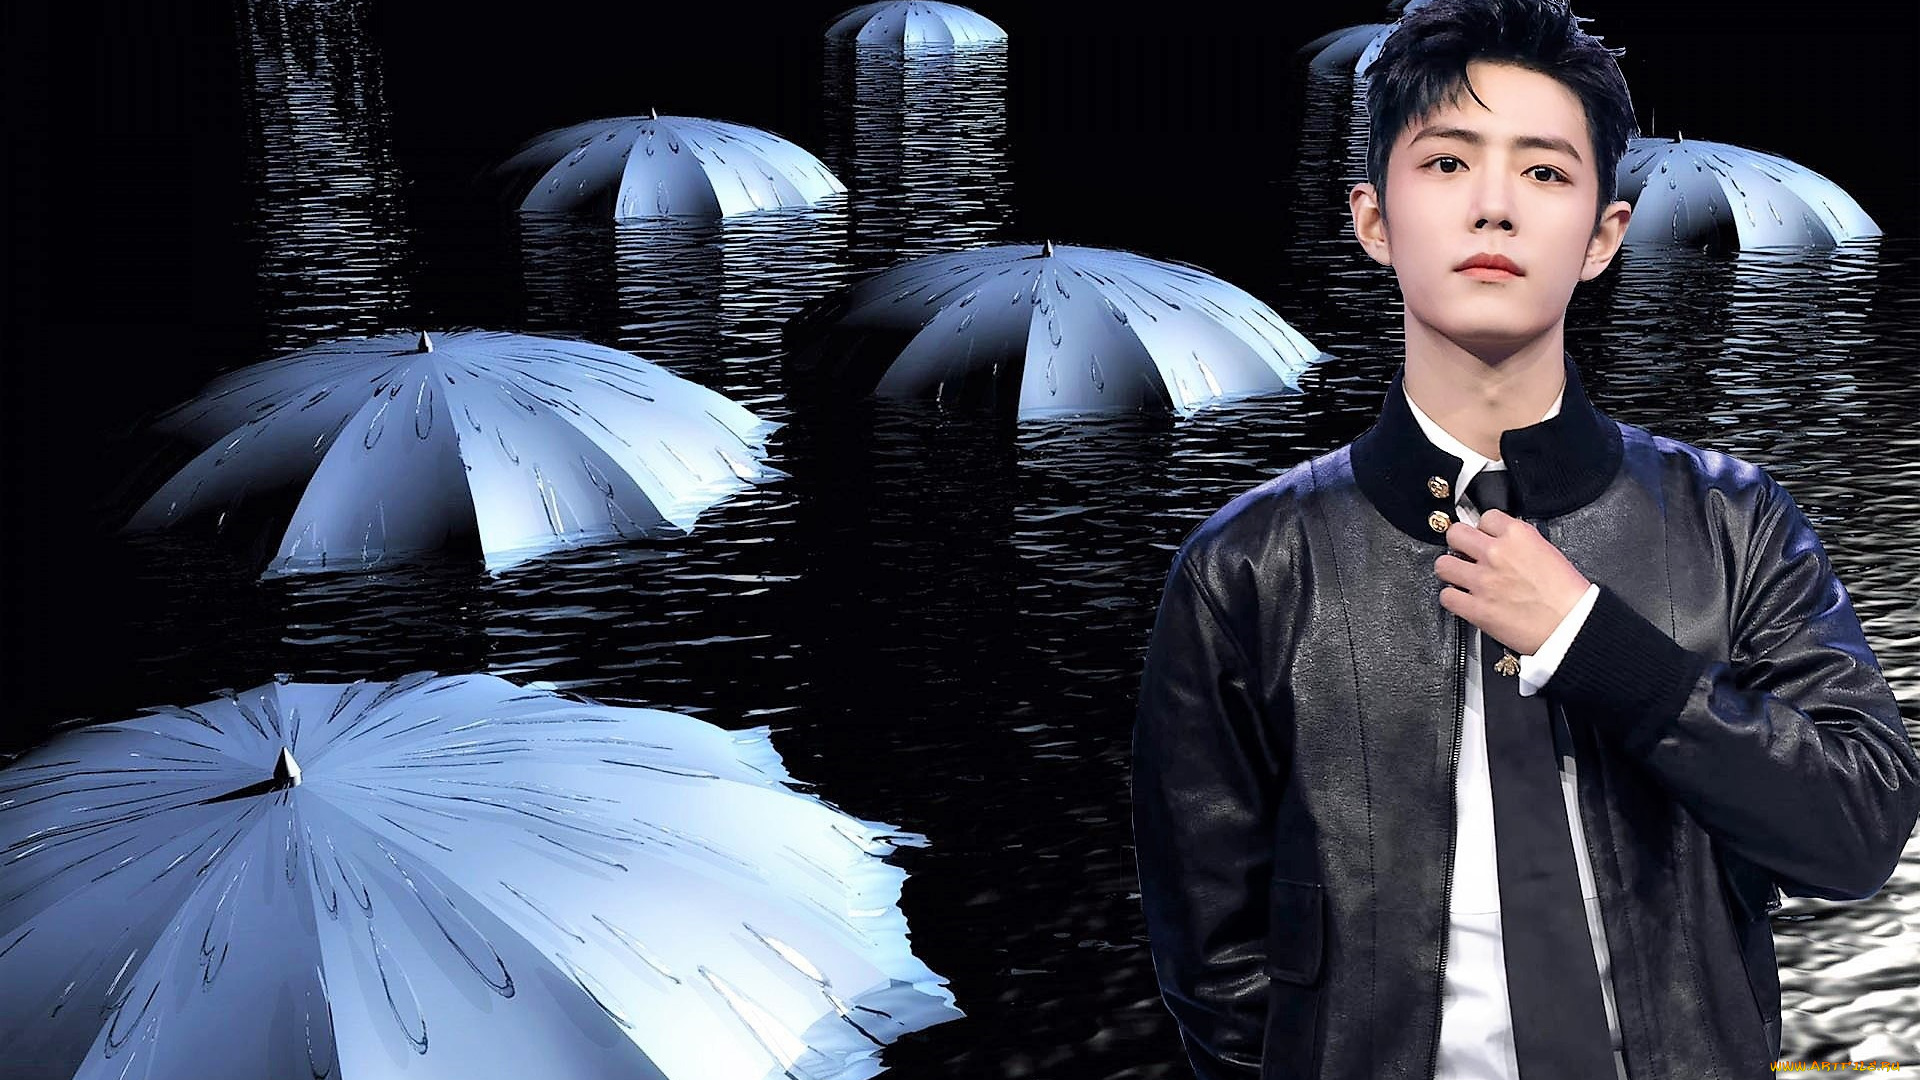 мужчины, xiao, zhan, актер, певец, куртка, галстук, зонты